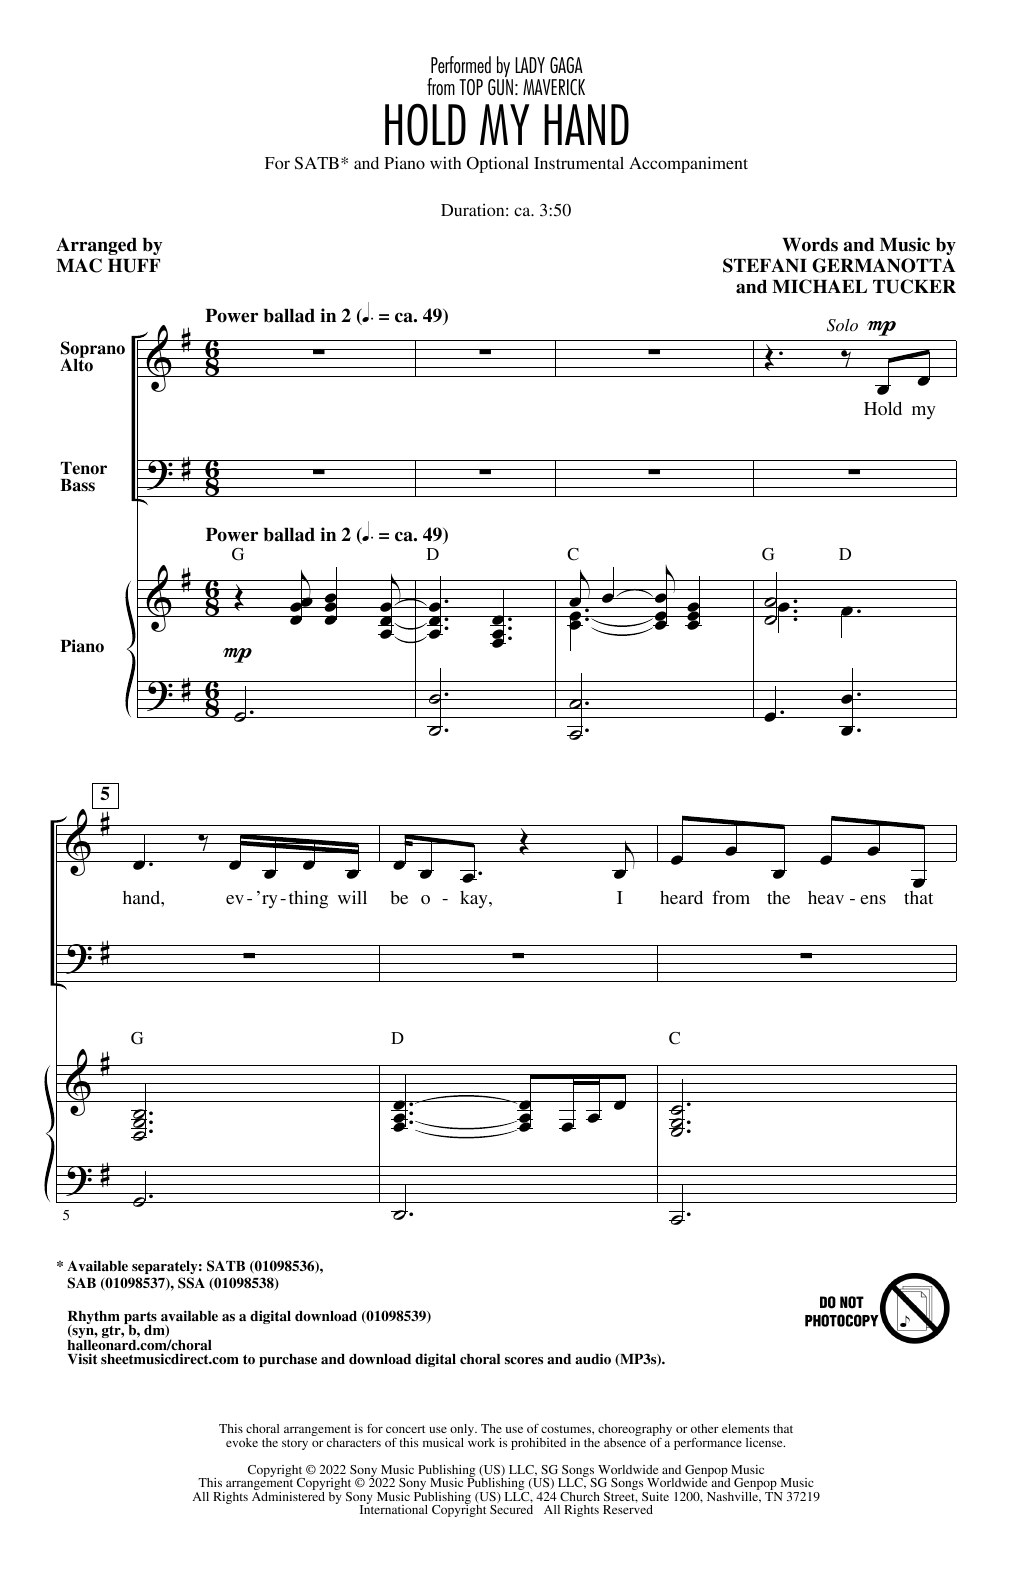 Lady Gaga Hold My Hand (from Top Gun: Maverick) (arr. Mac Huff) Sheet Music Notes & Chords for SATB Choir - Download or Print PDF